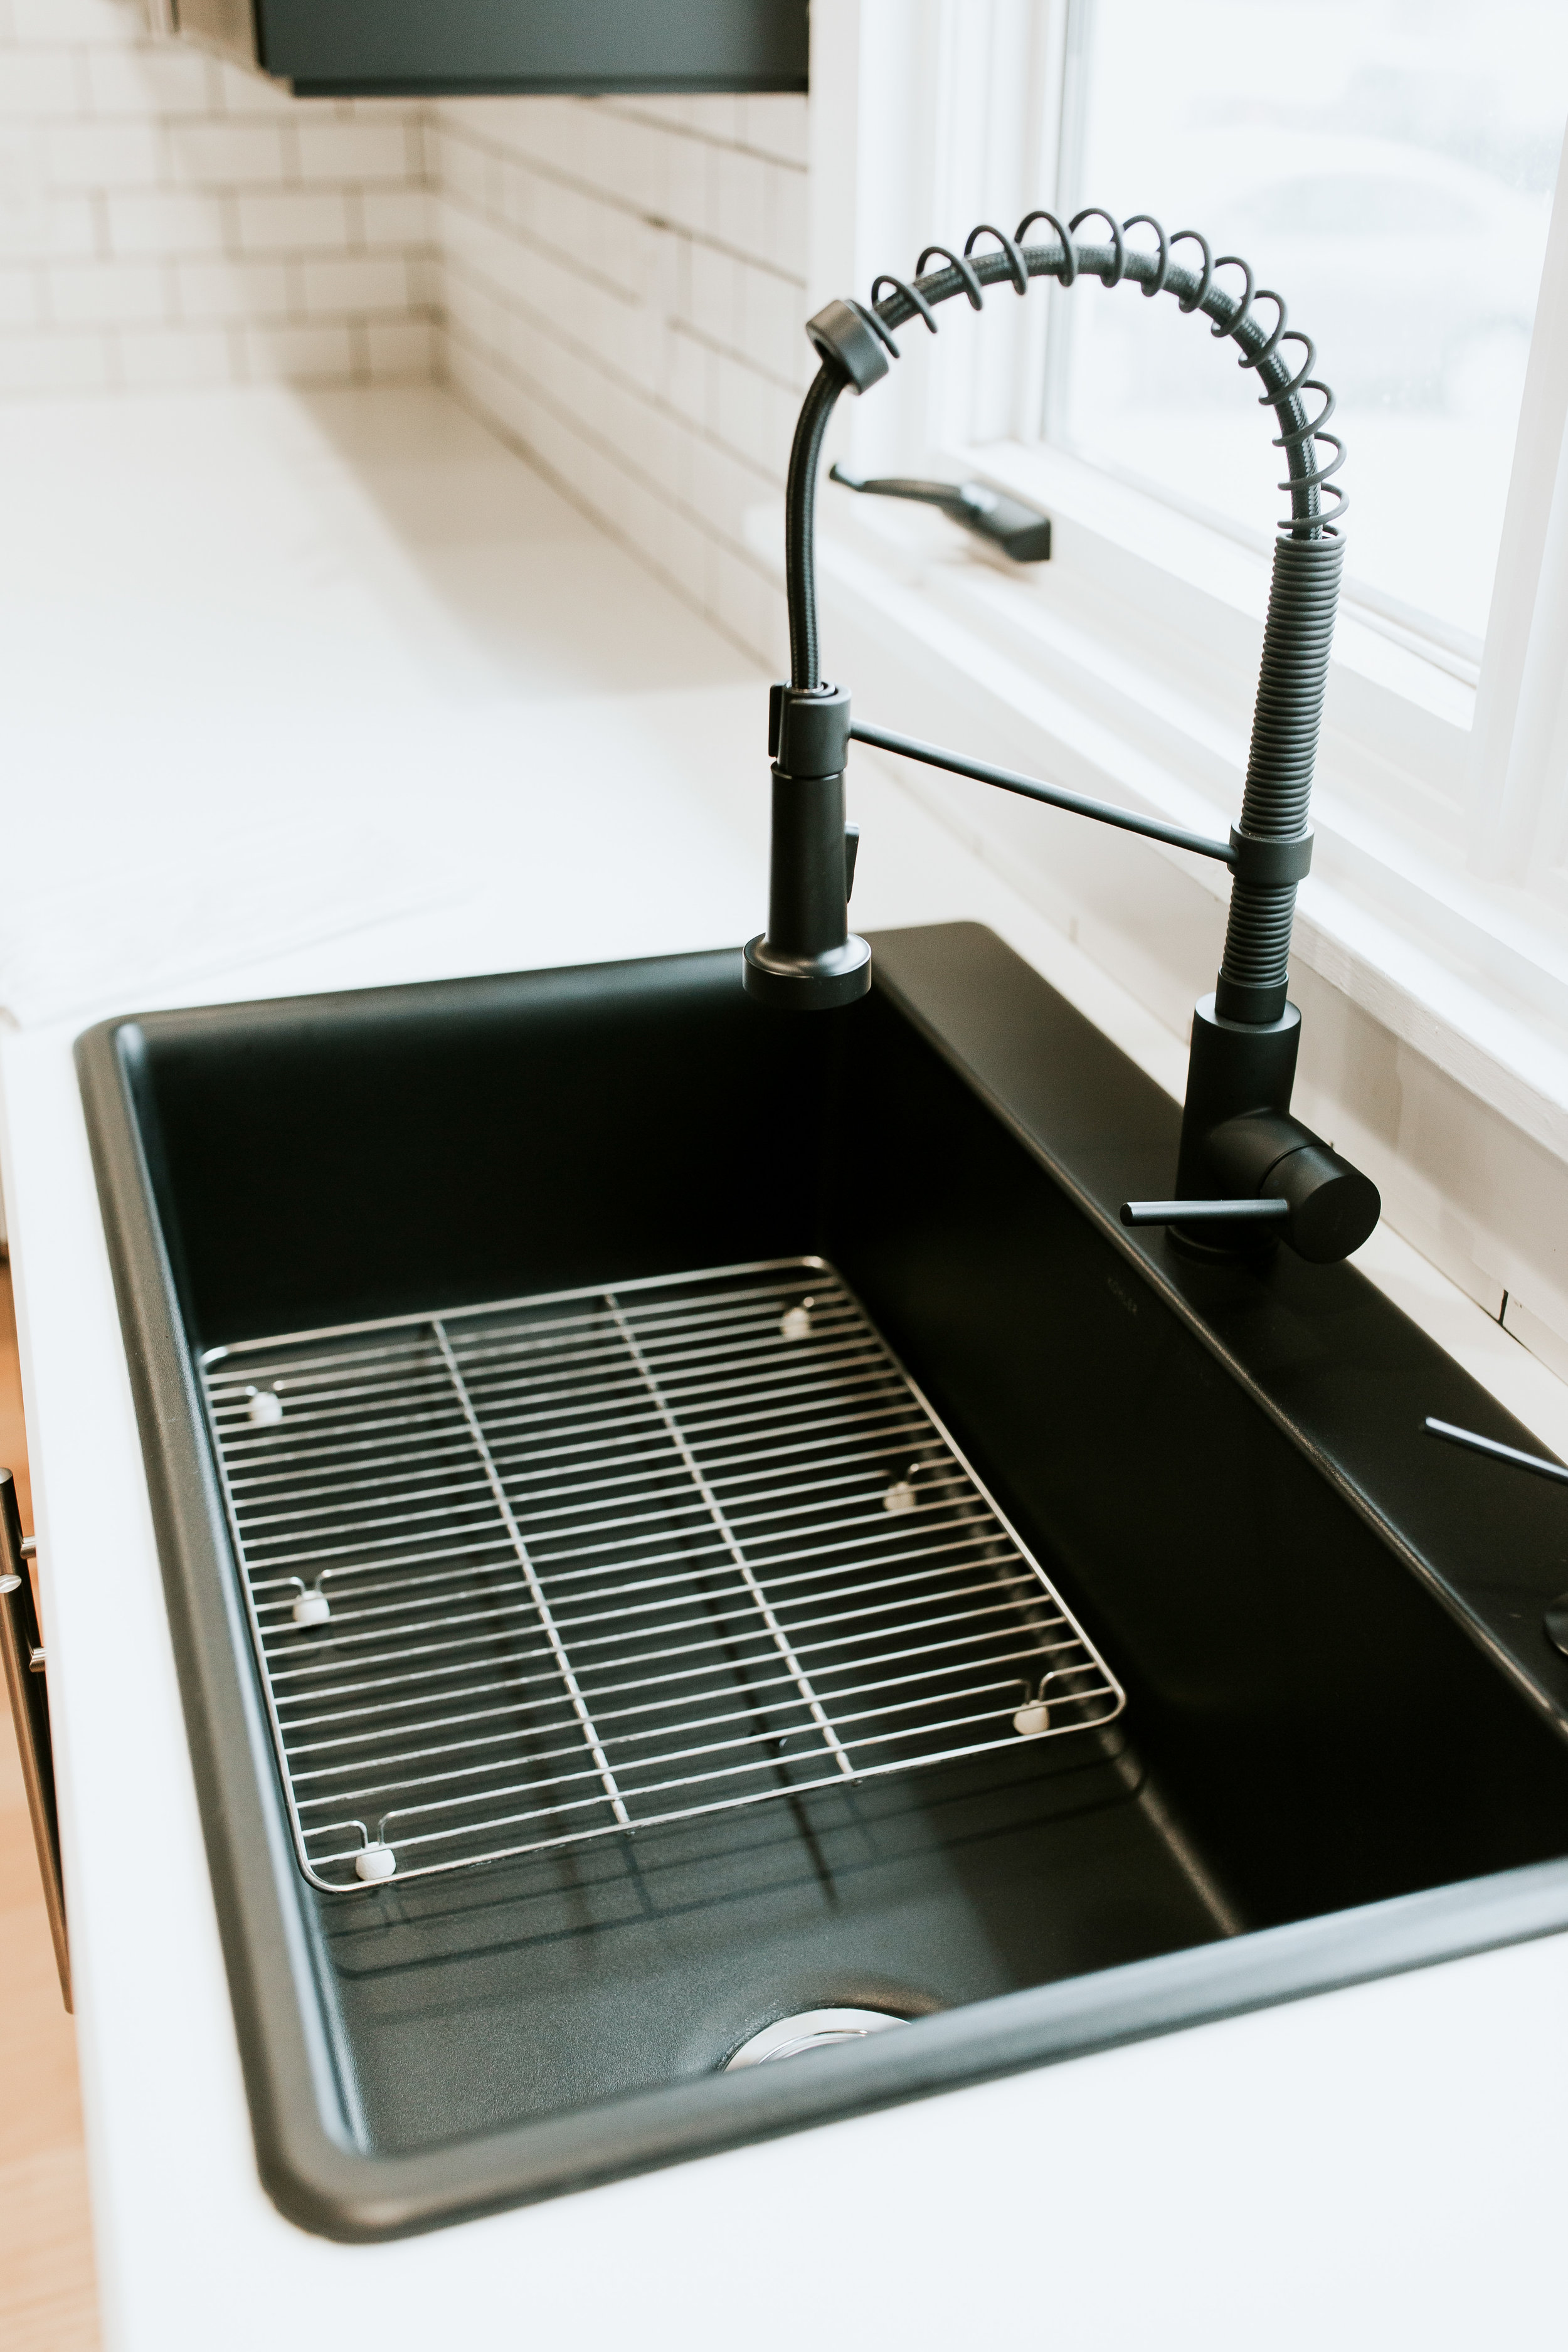 Full modern kitchen tour - Black sinks, black faucet, and white countertops